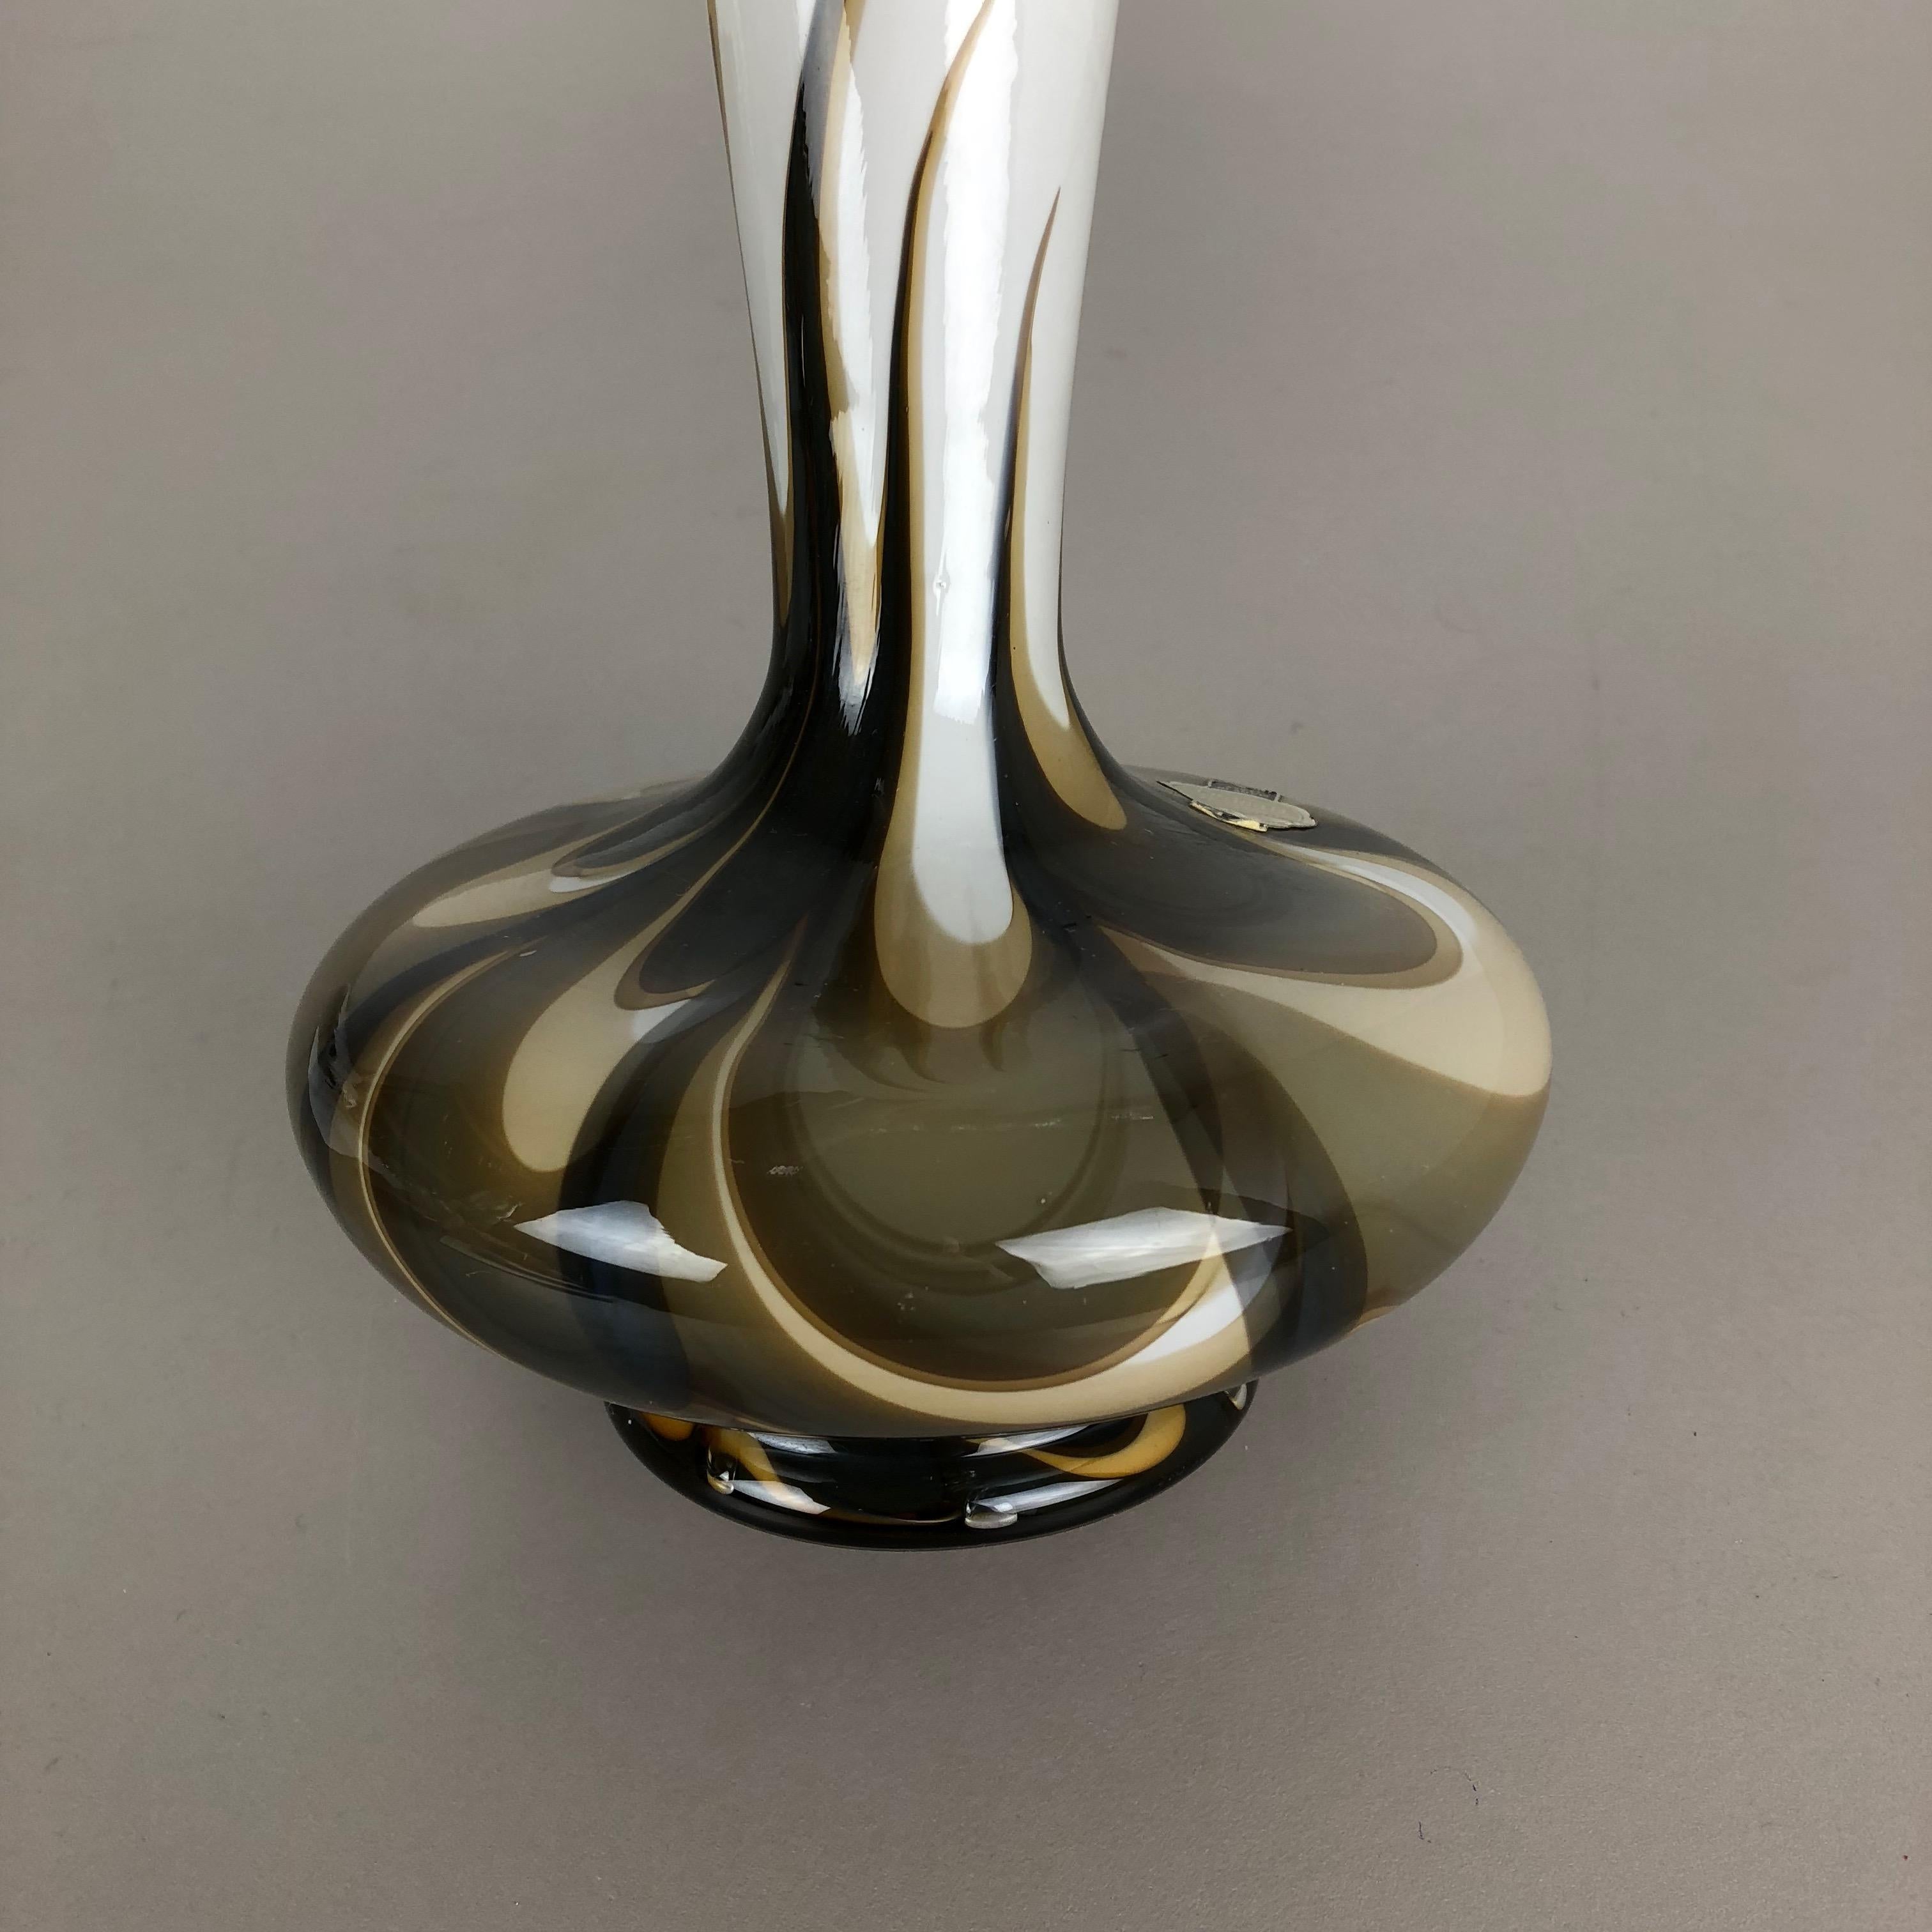 Rare Extra Large Vintage Pop Art Opaline Florence Glass Vase Design, Italy 1970s For Sale 5